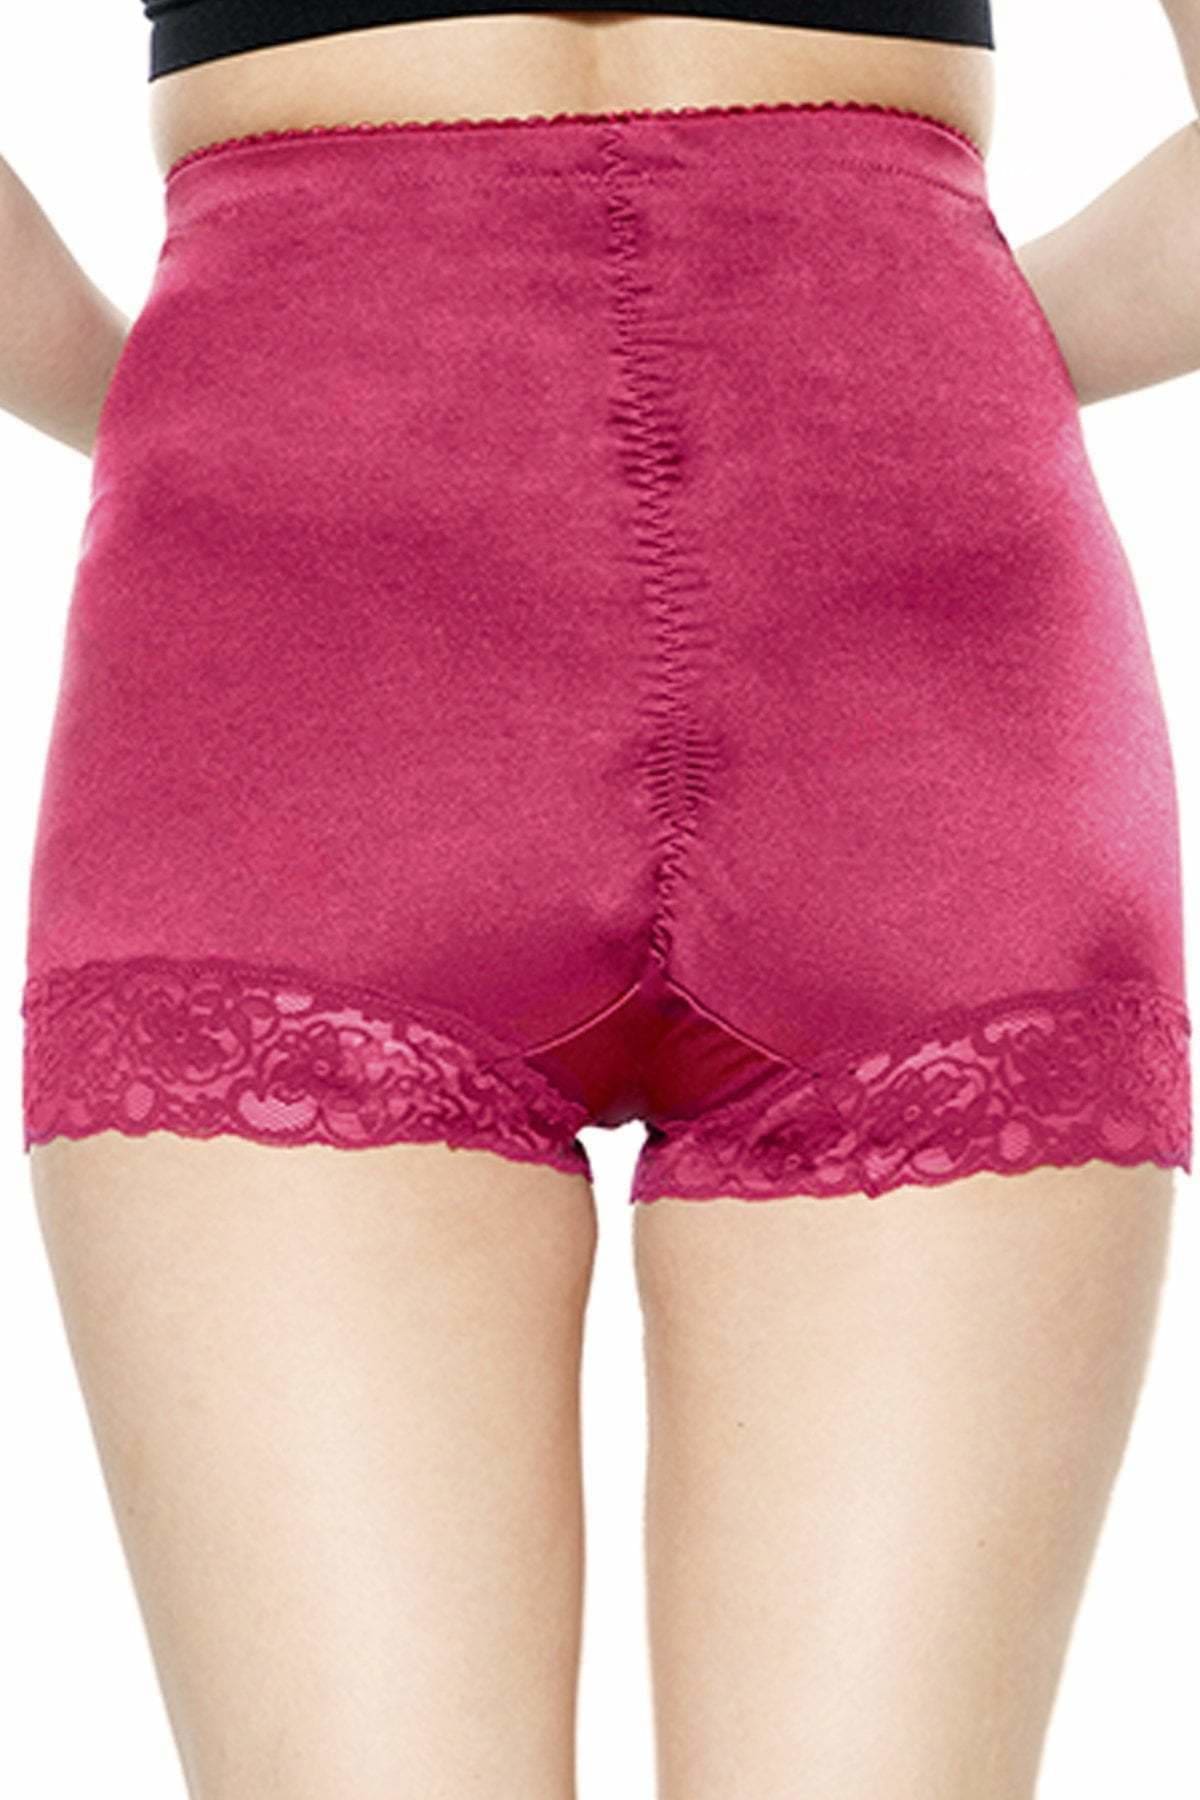 Black and Pink Lace Bra and Panties – Bra from Pin-up Girls Patterns and  Panties from Kwik Sew K2325 – Jolirose